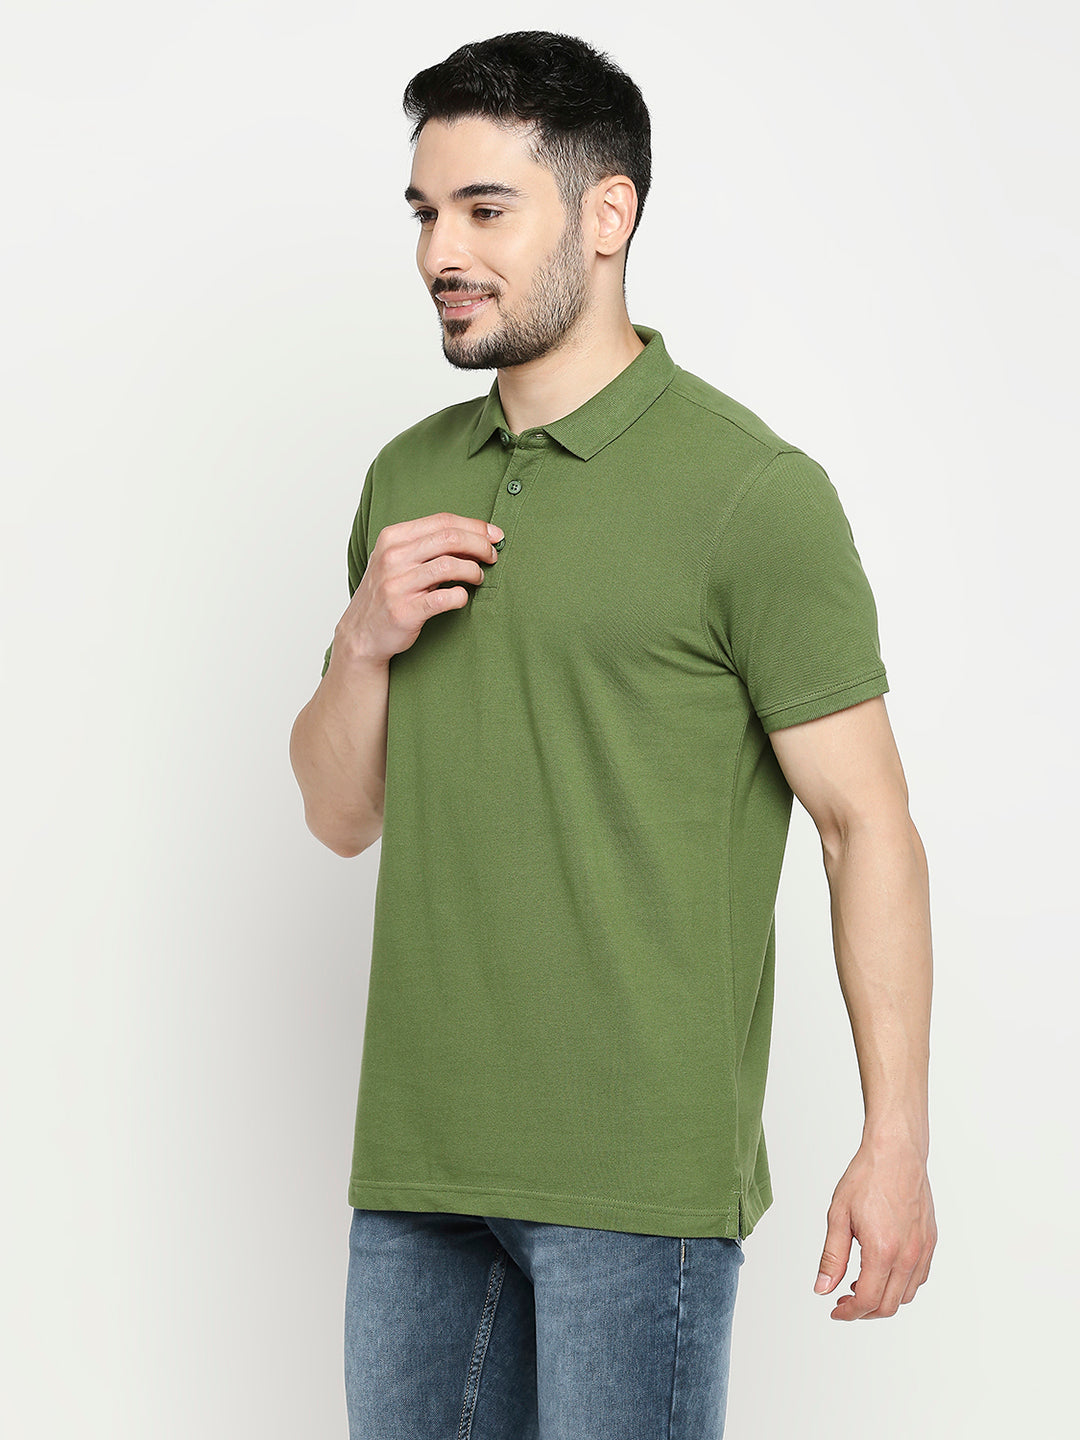 Spykar Cactus Green Cotton Half Sleeve Plain Casual Polo T-Shirts For Men